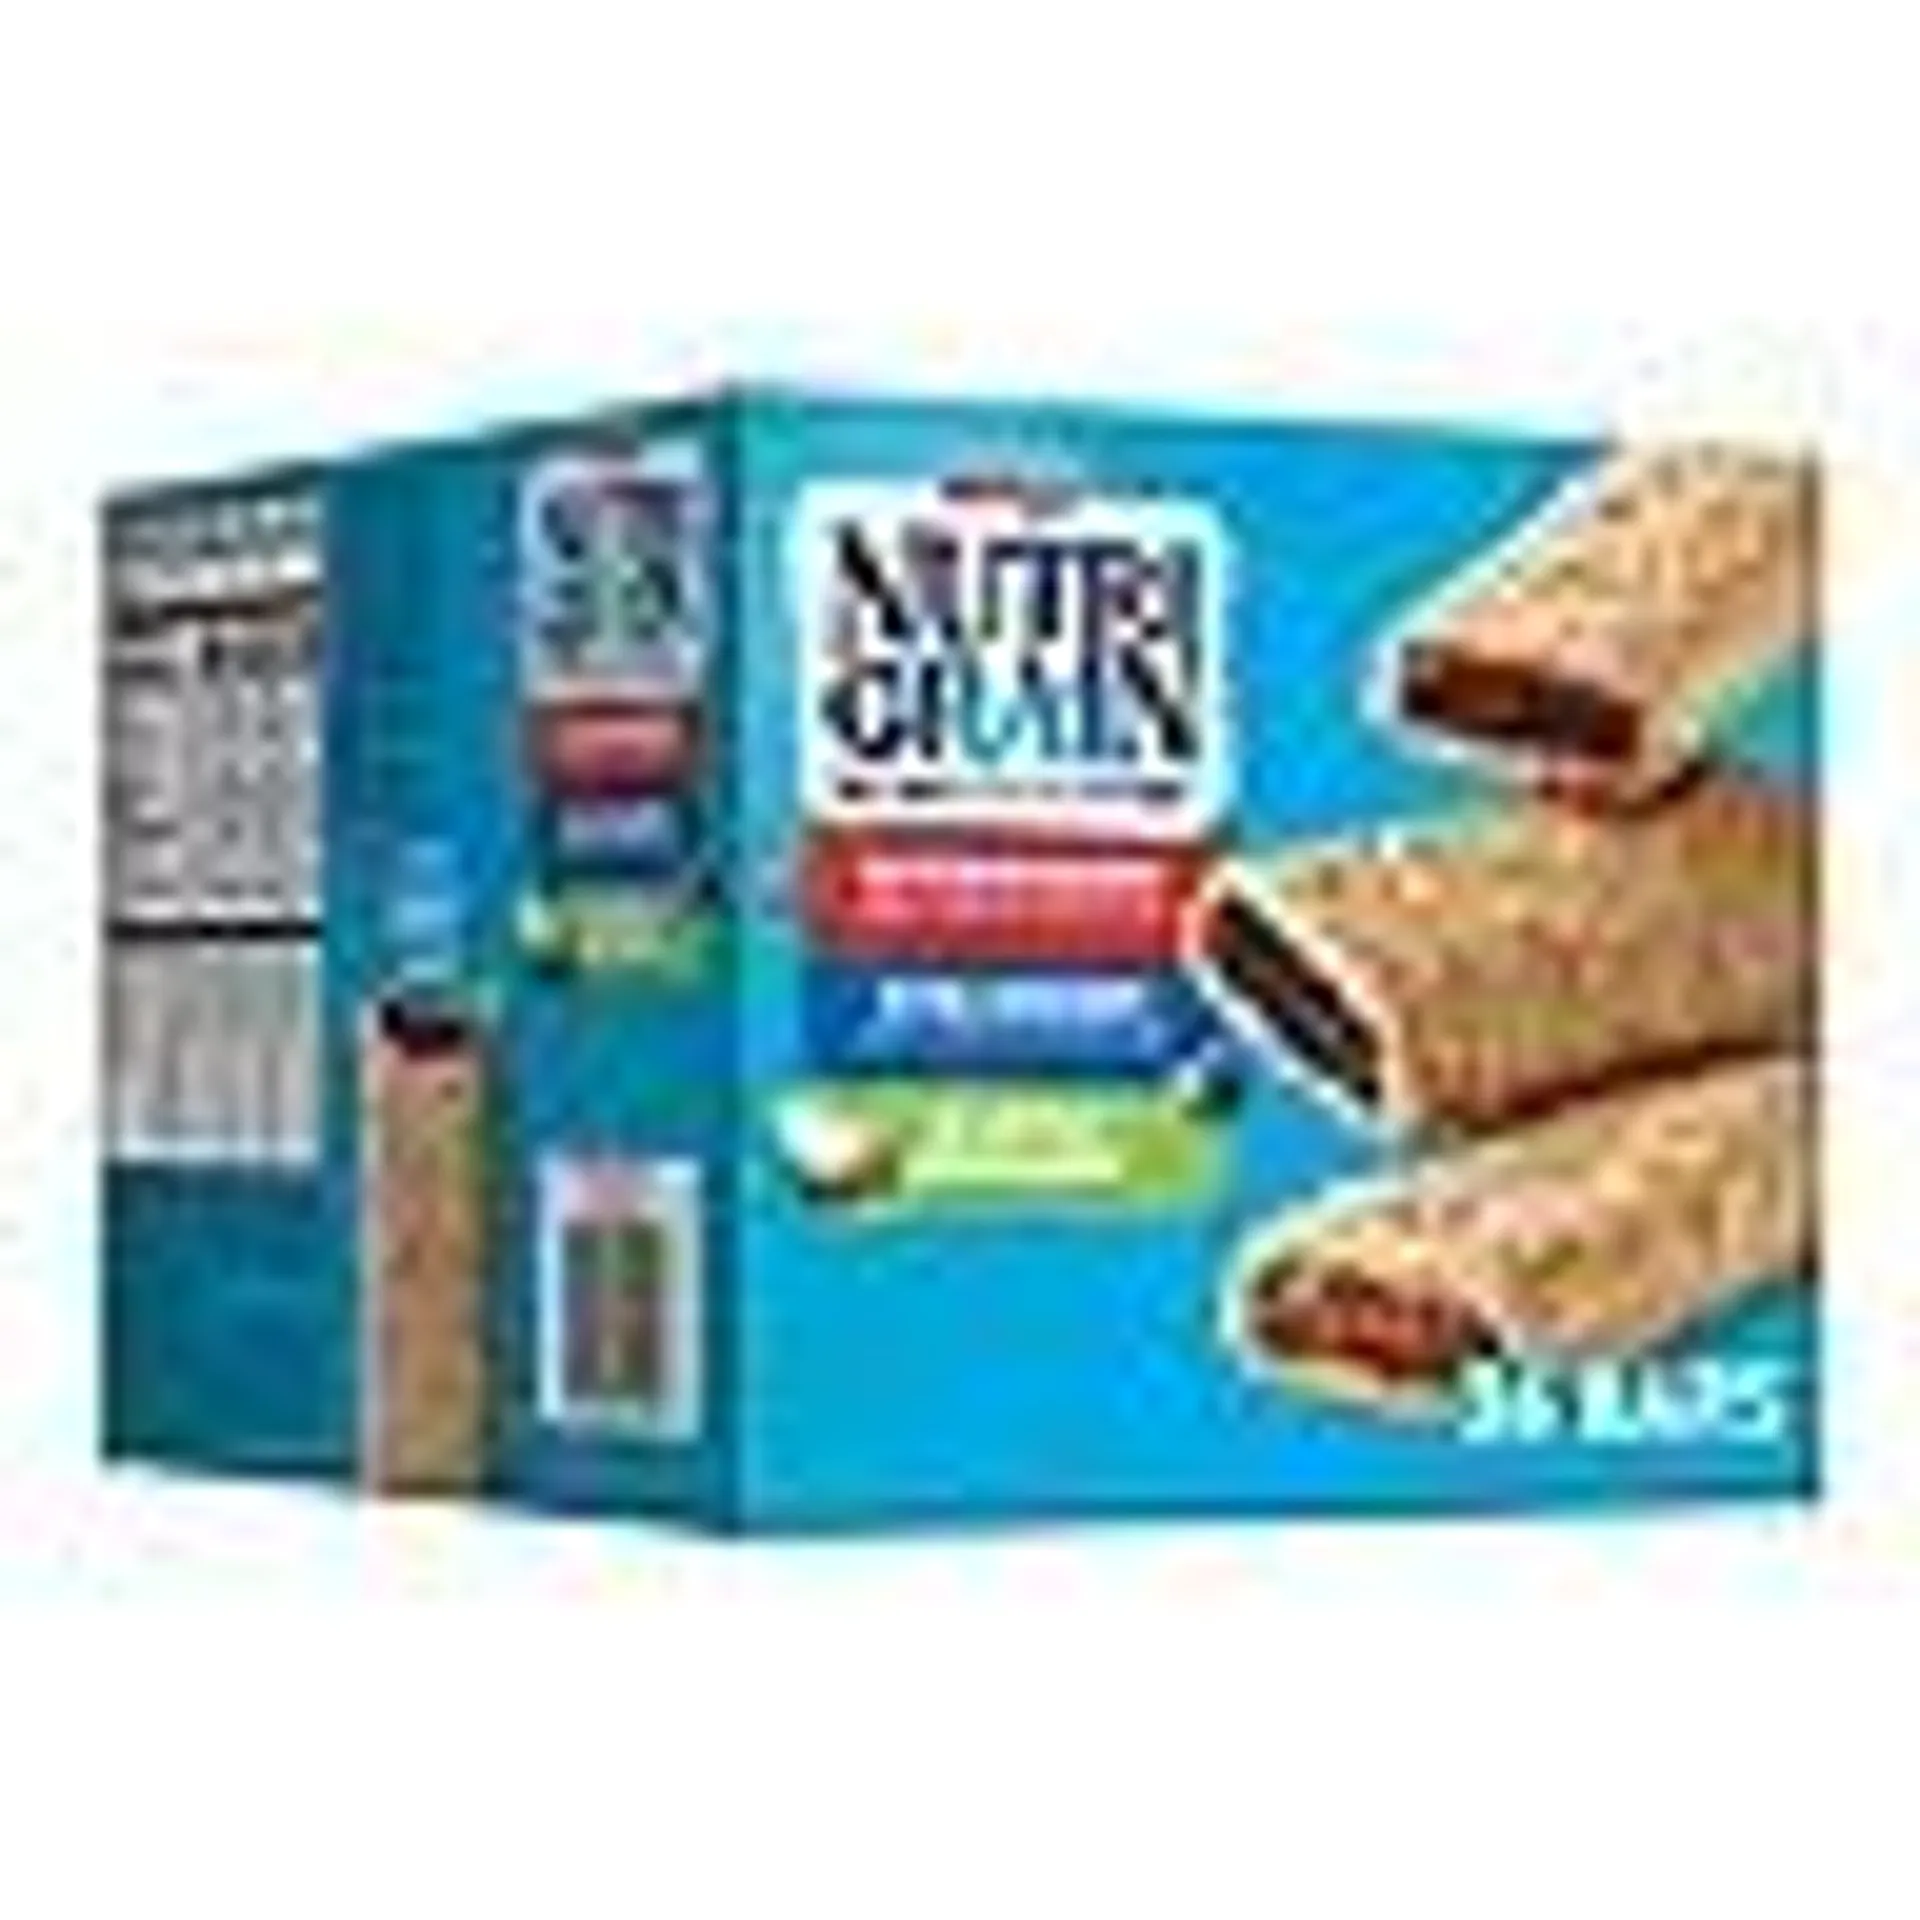 Nutri-Grain Bars Variety Pack, 1.3 oz., 36 pk.